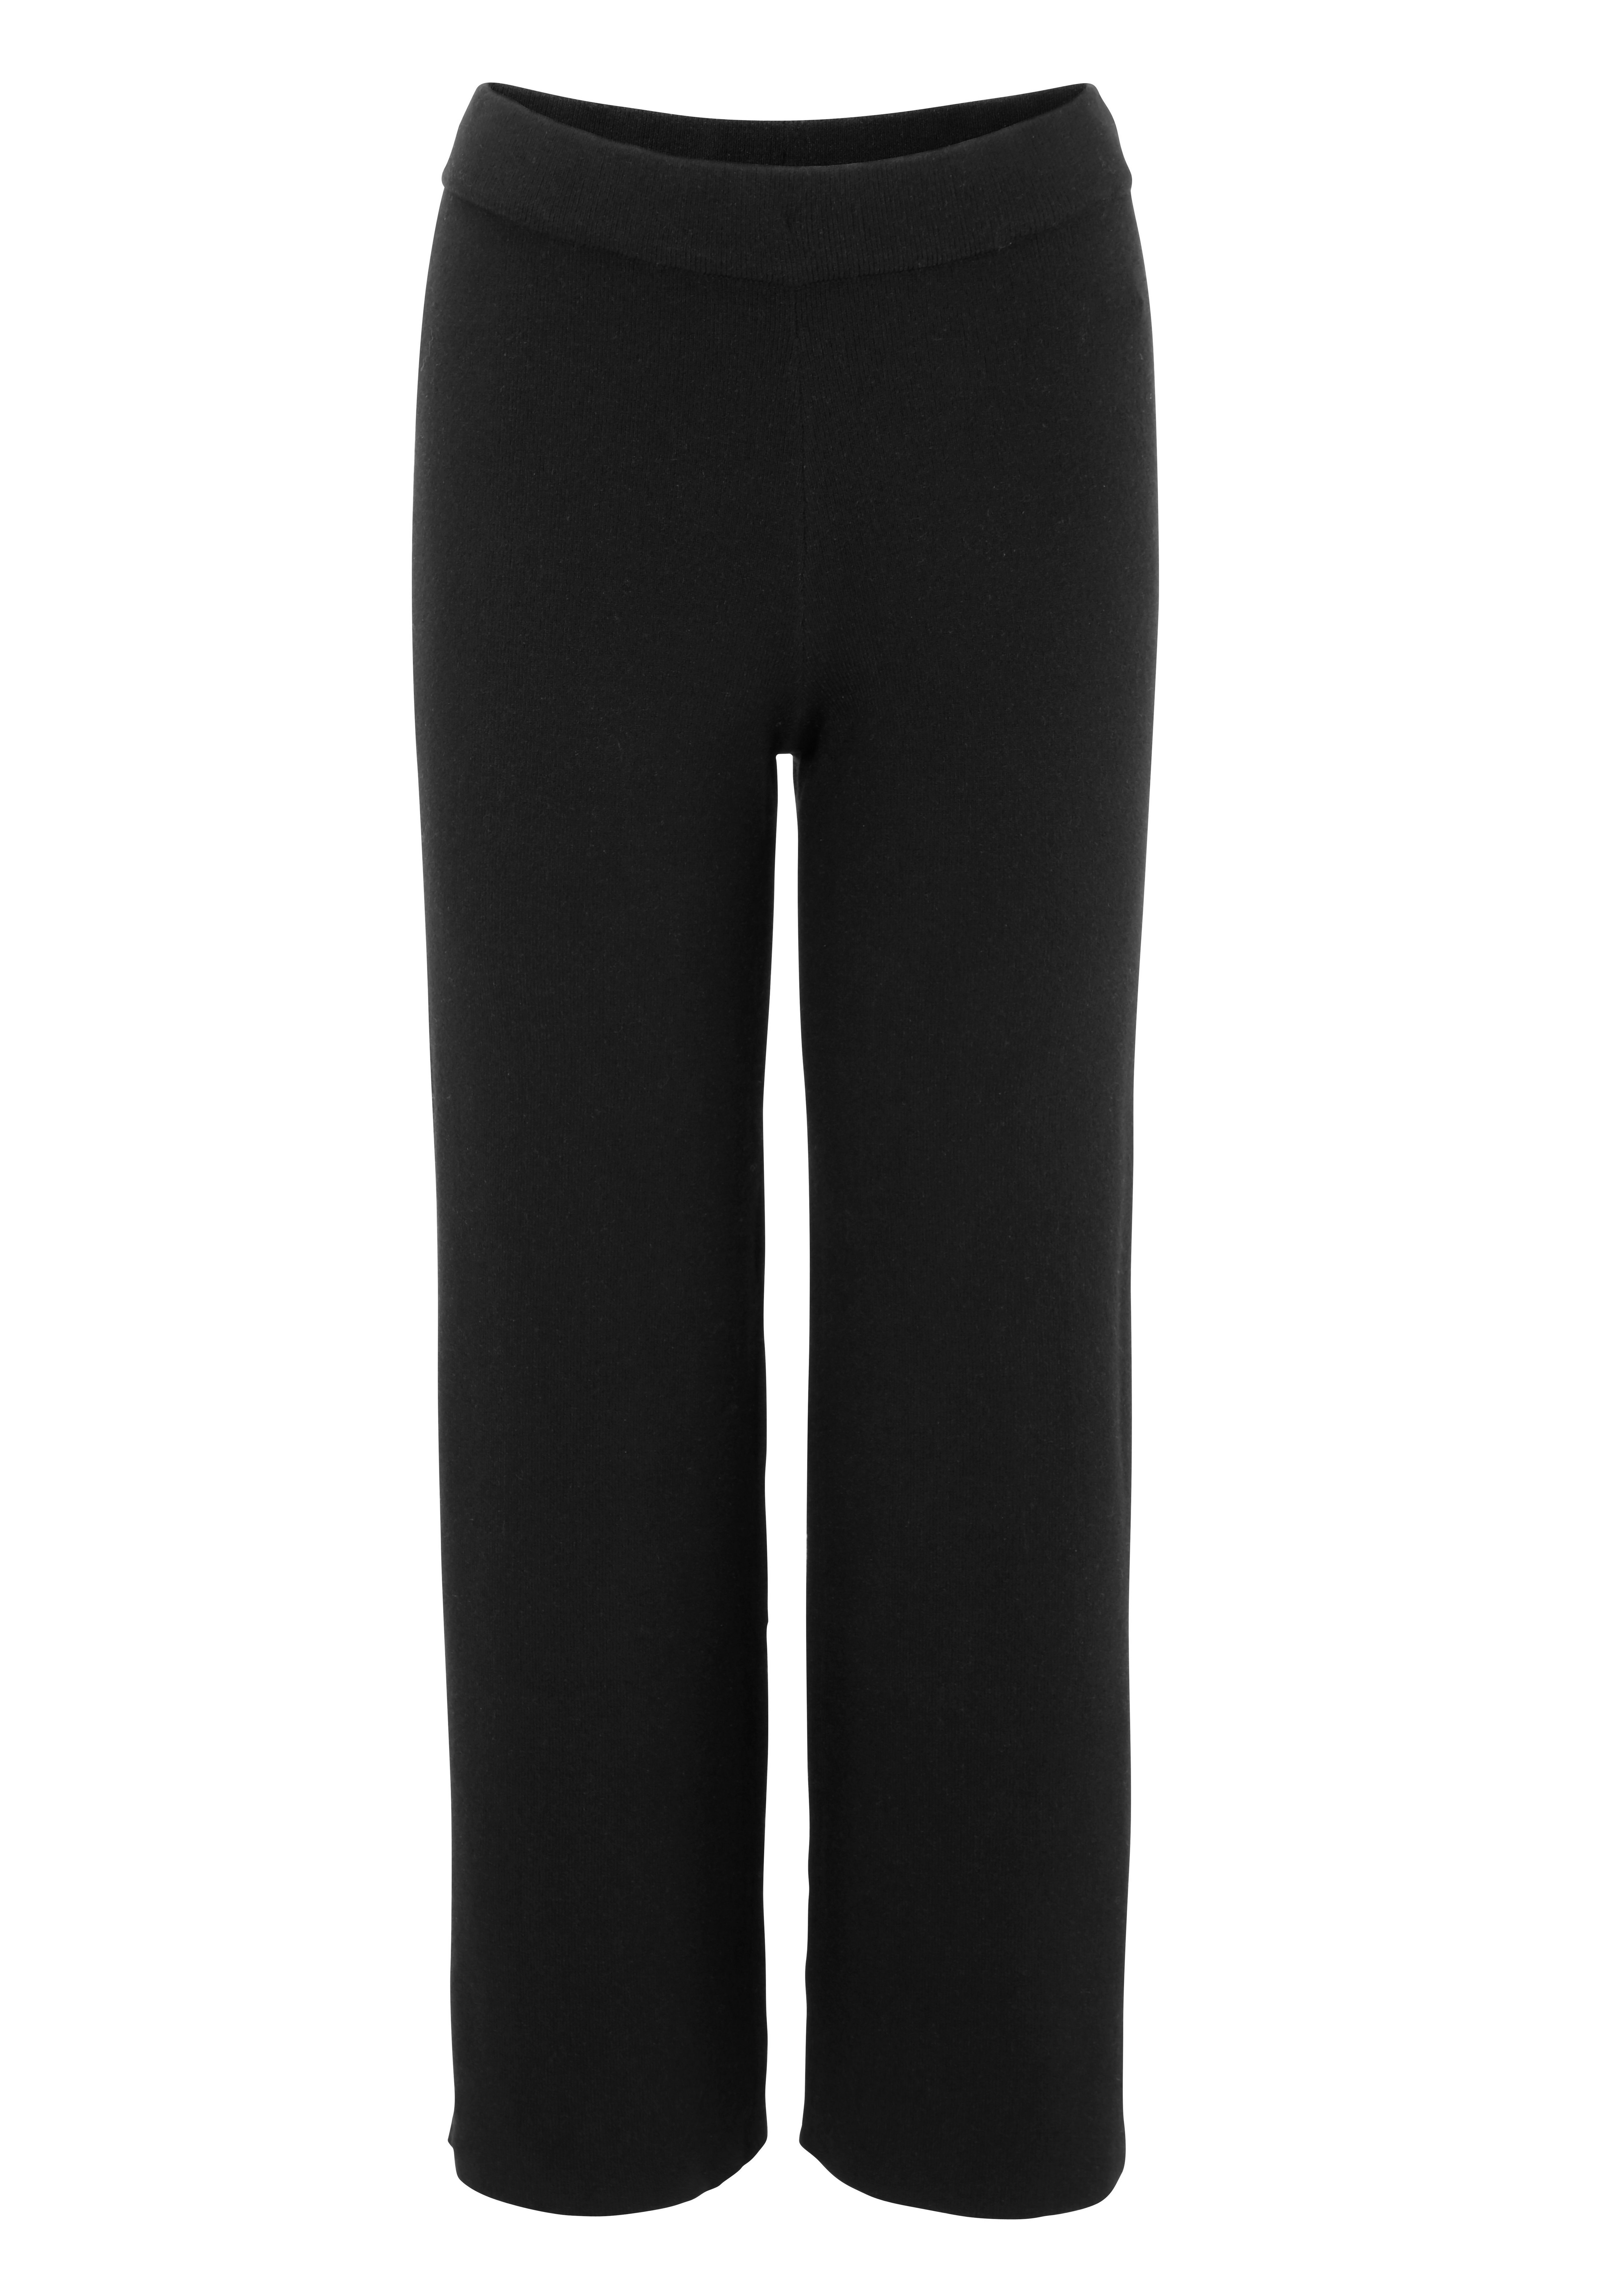 Aniston CASUAL Strickhose in trendiger schwarz Culotte-Form